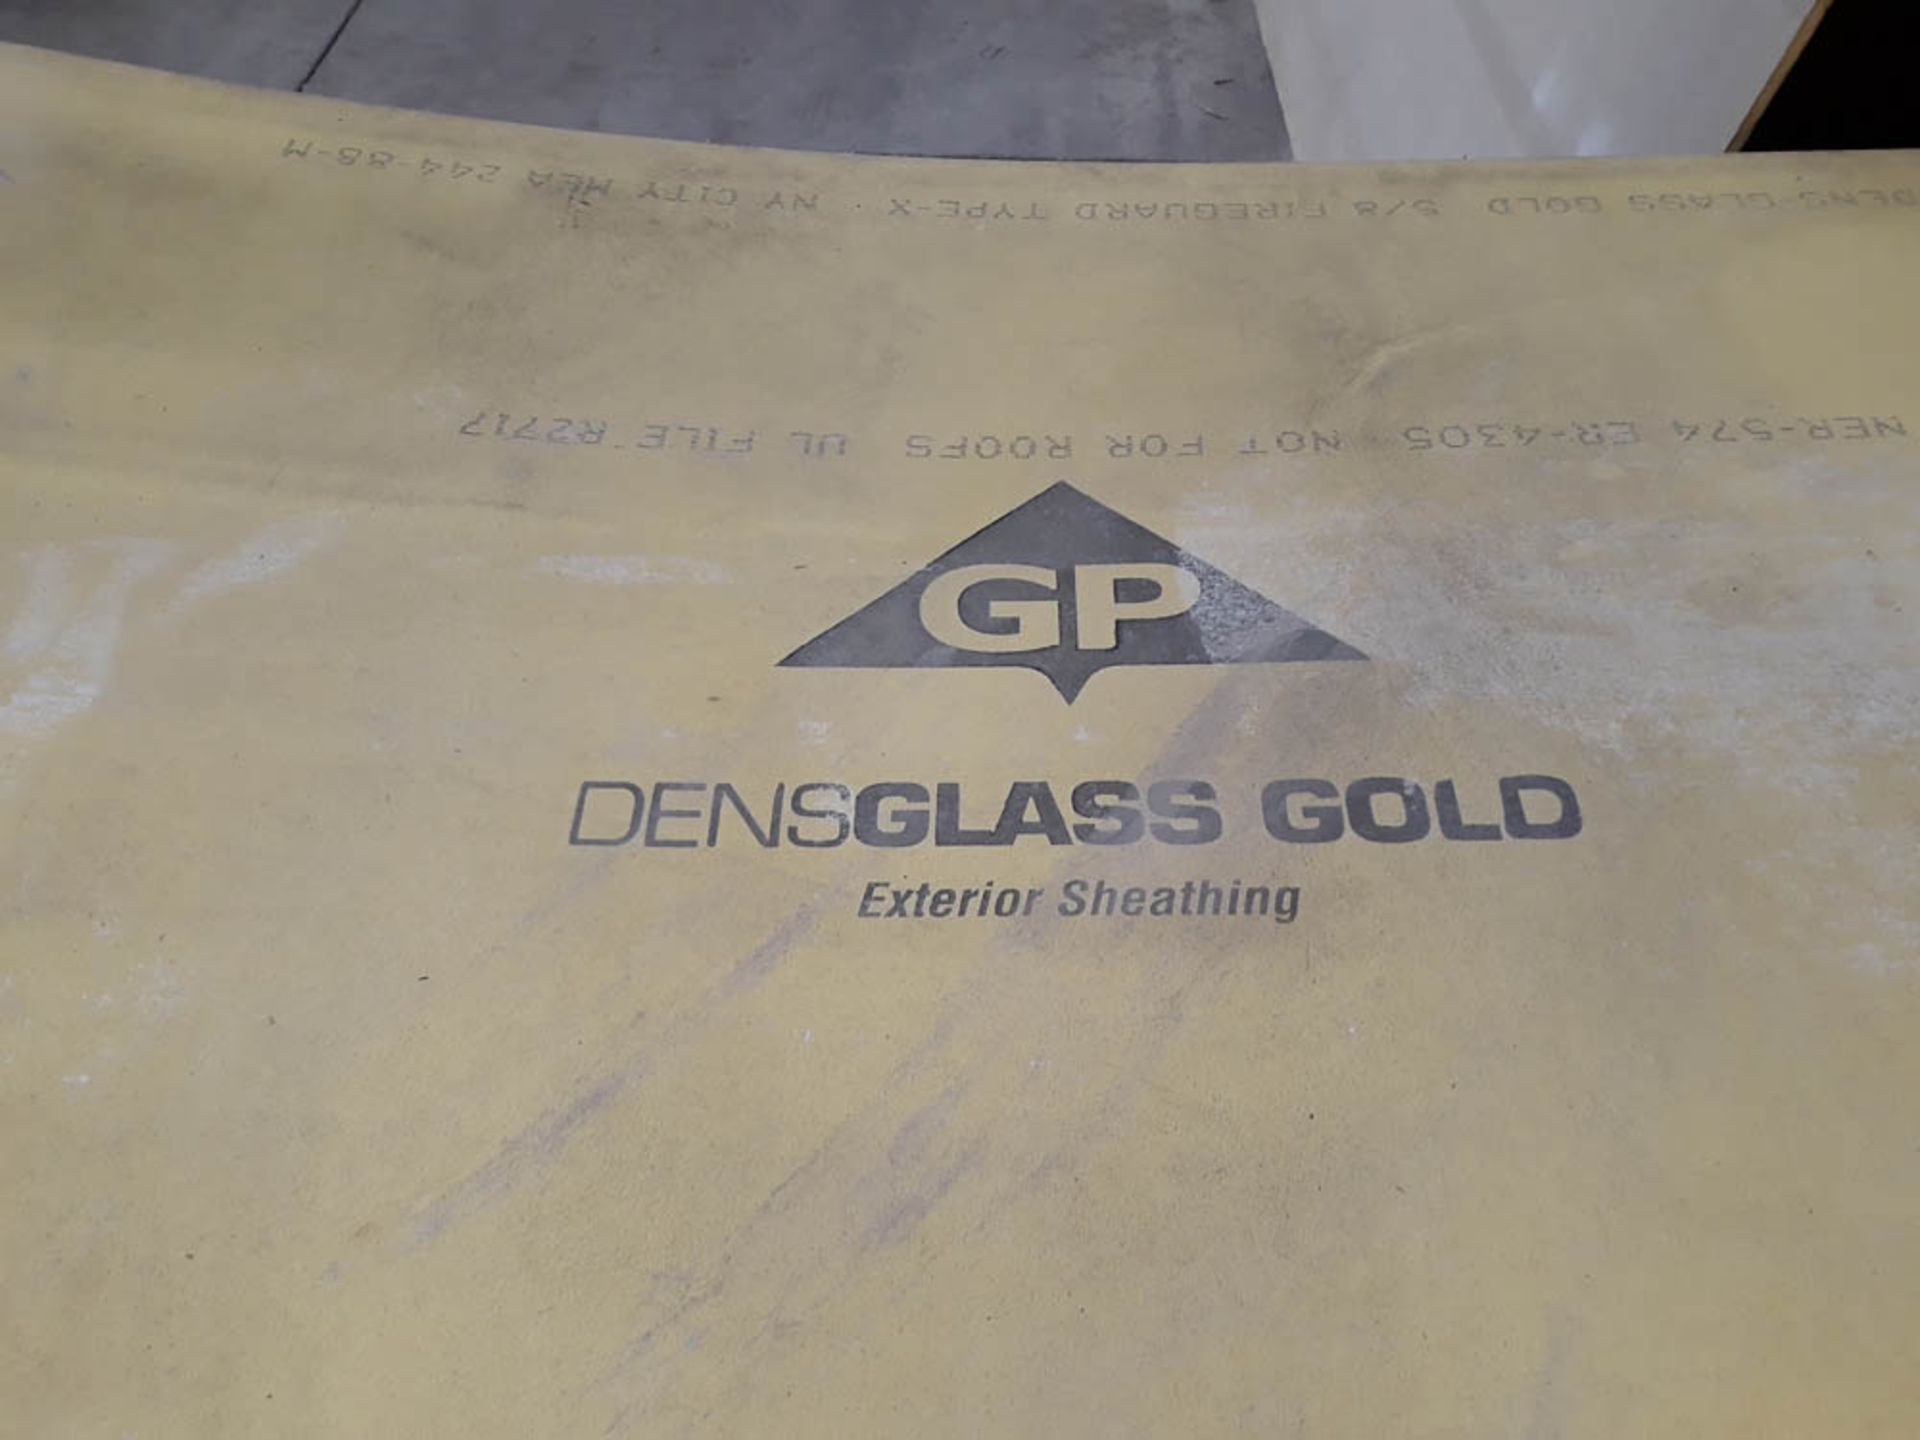 (16) Densglass Gold Exterior Sheathing5/8 Fireguard Type X - Image 2 of 2